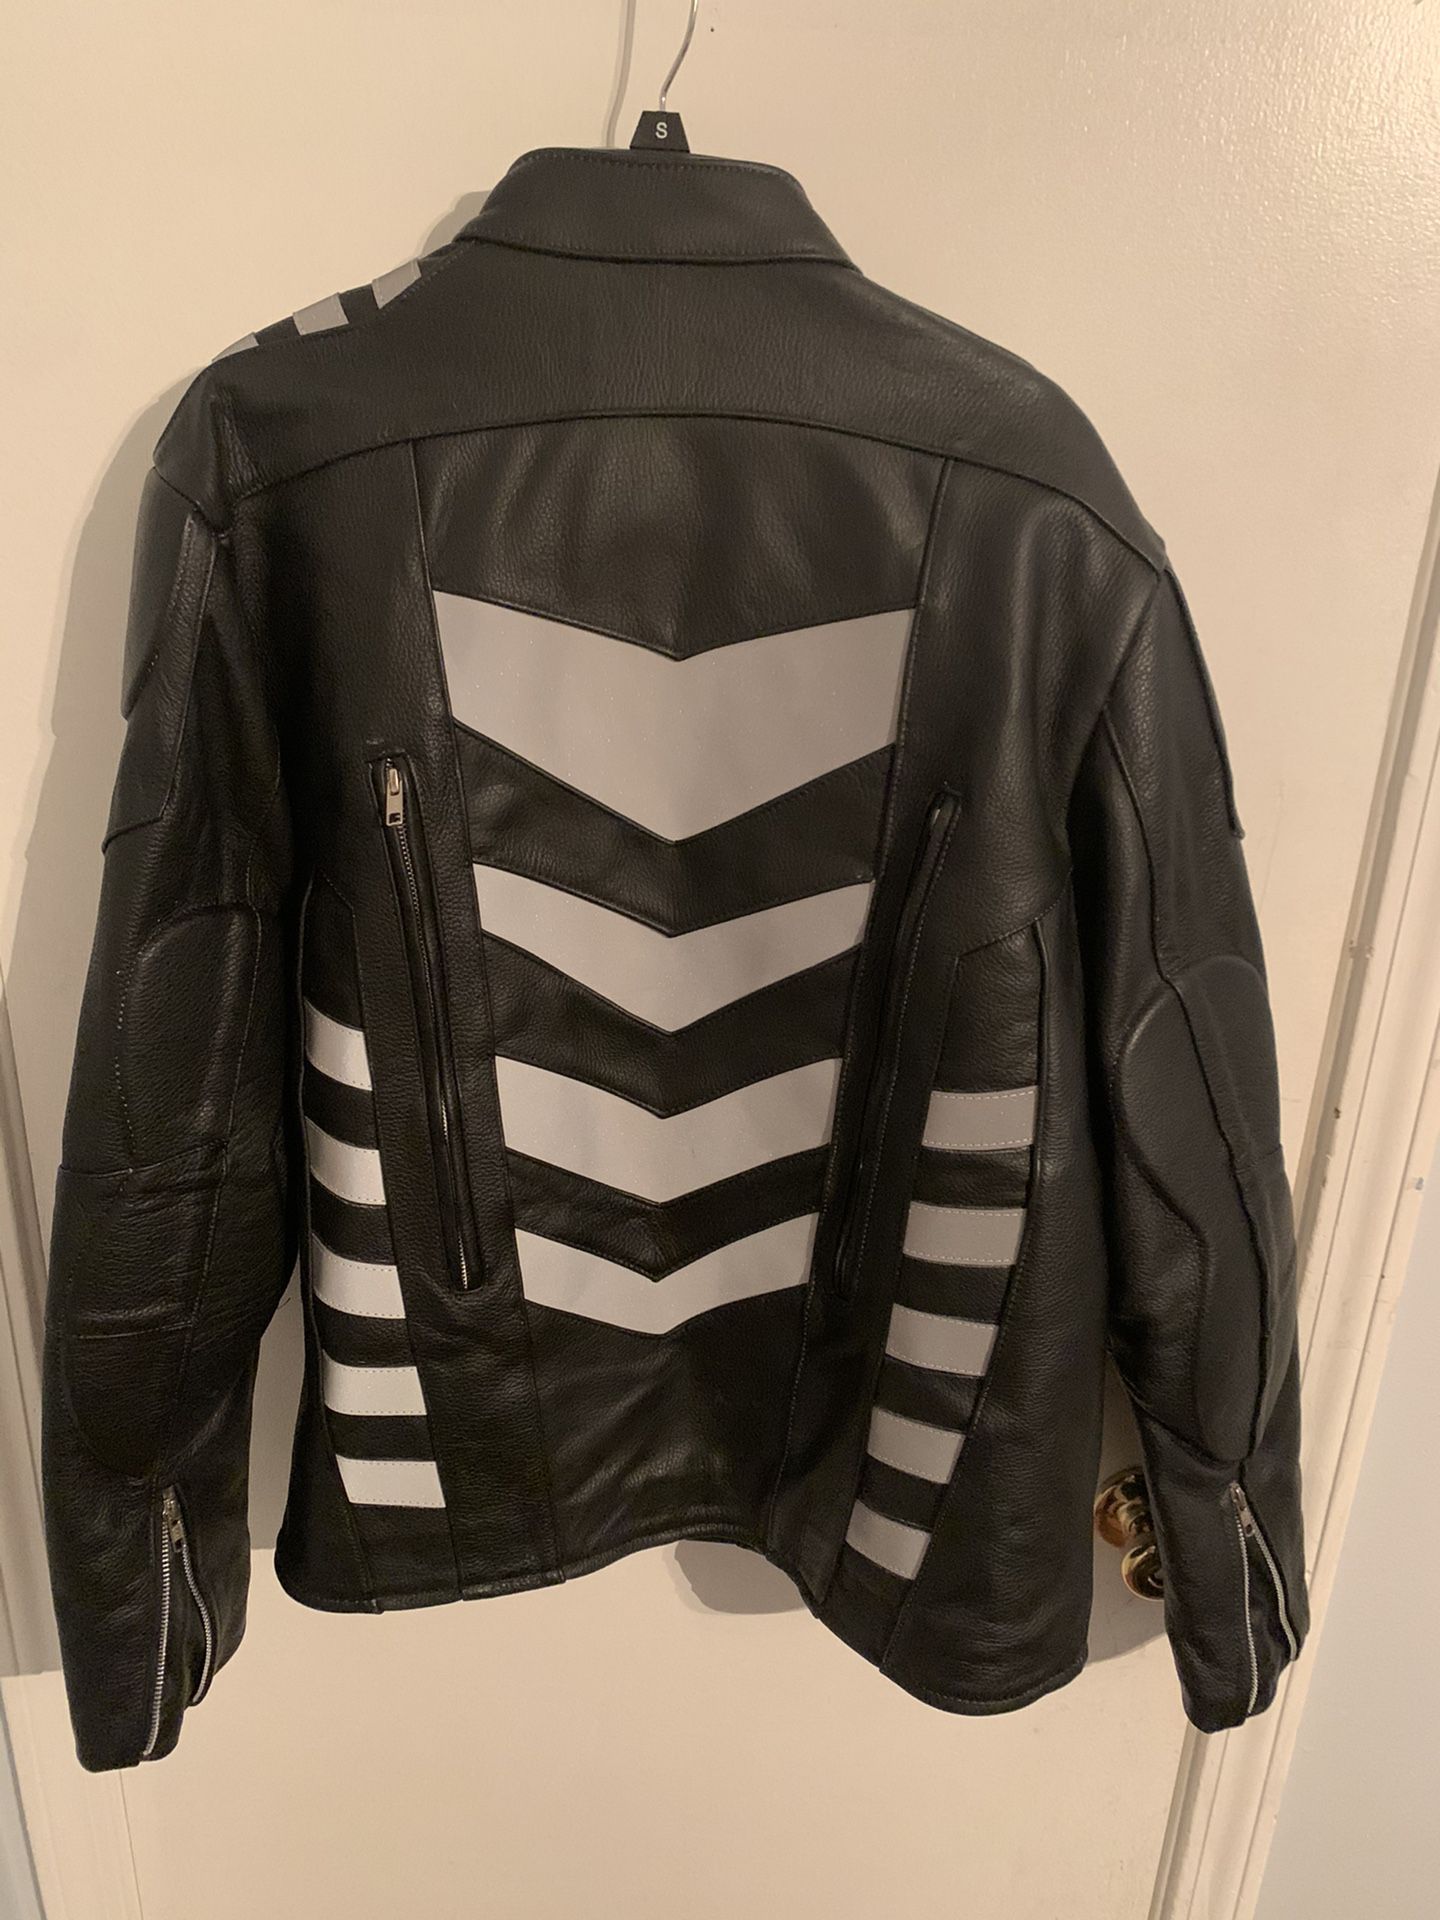 Motorcycle jacket $100